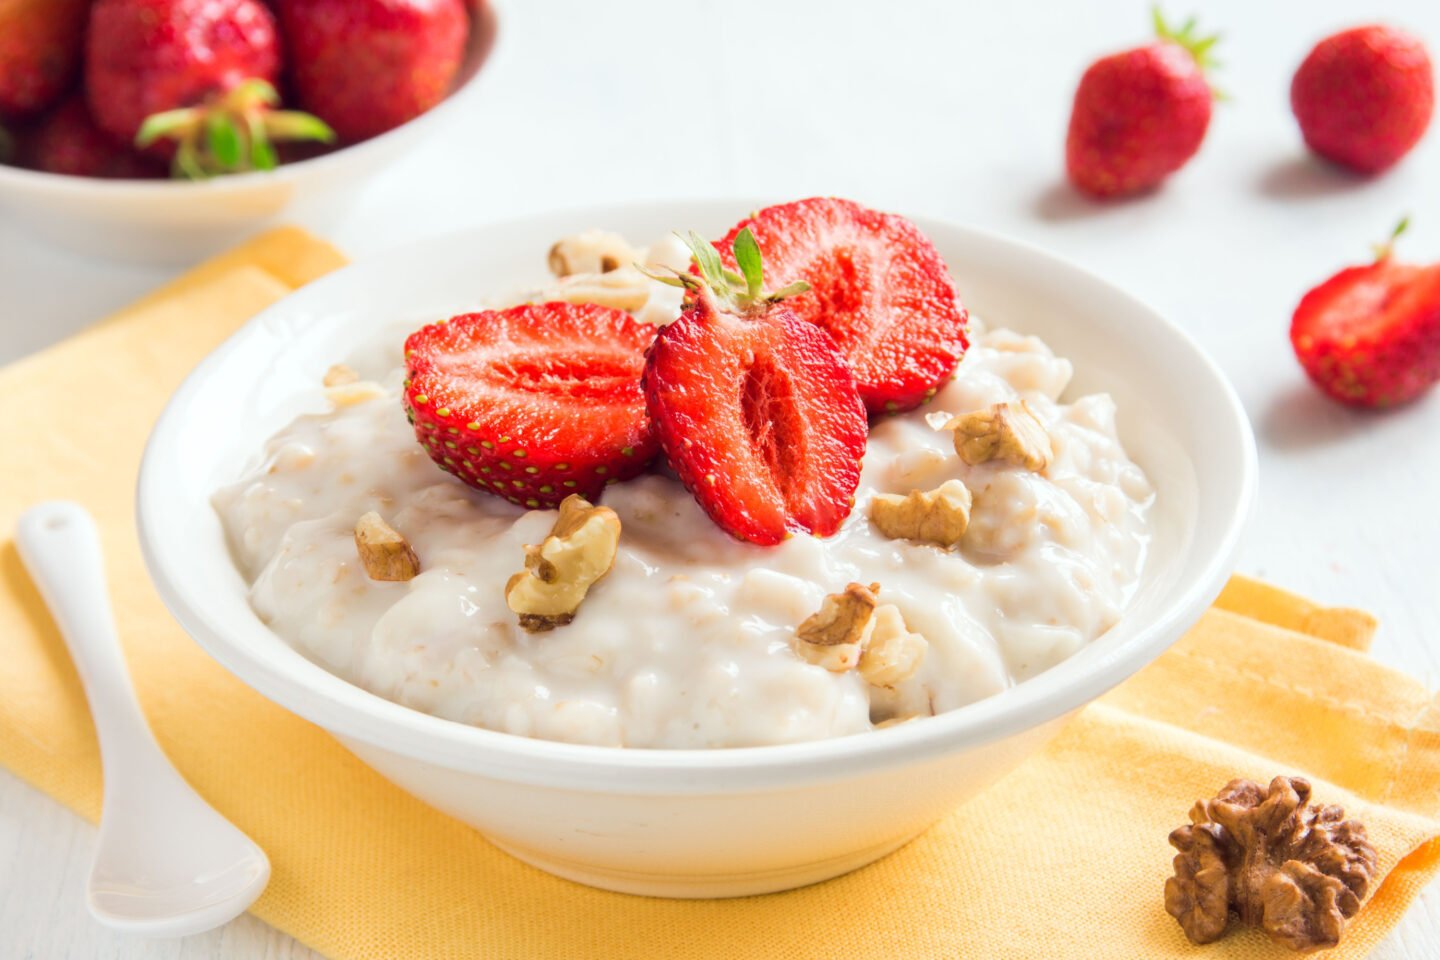 oatmeal porridge with strawberries and walnuts